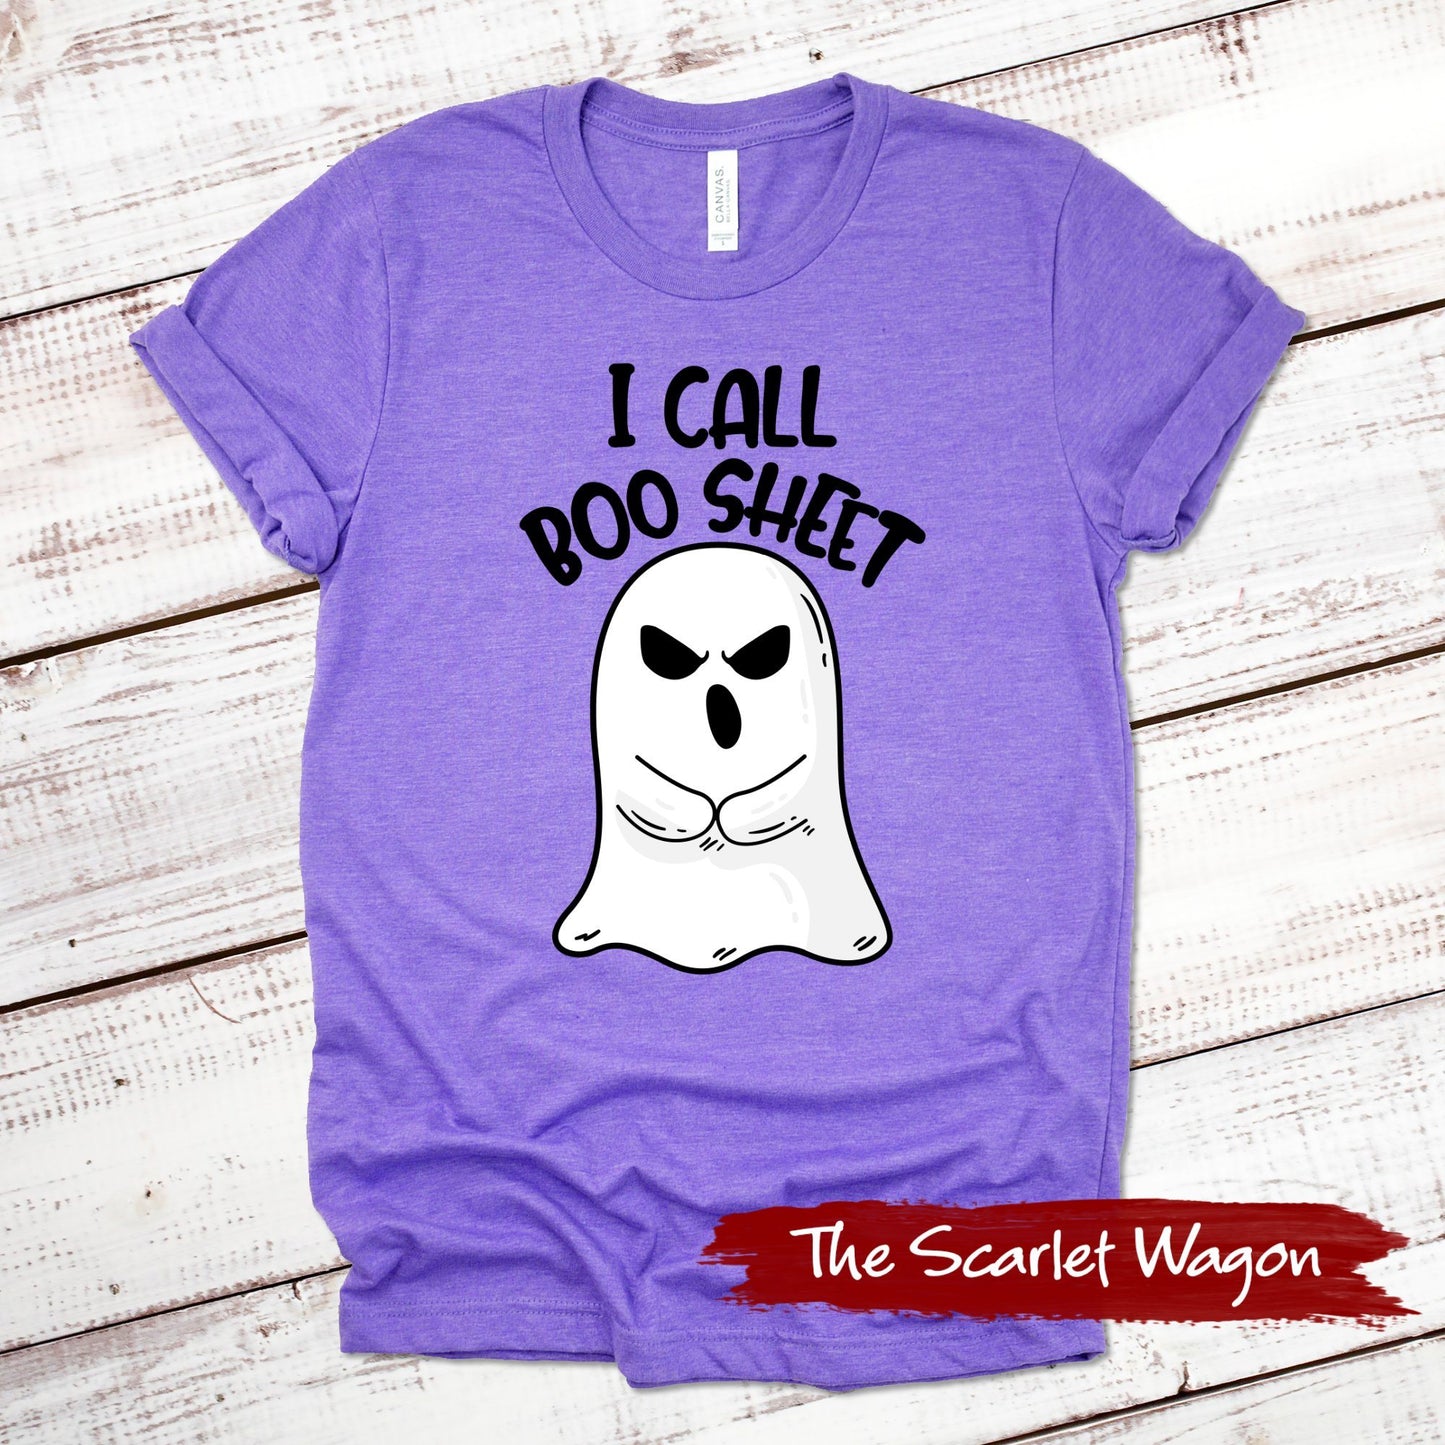 I Call Boo Sheet Halloween Shirt Scarlet Wagon Heather Purple XS 